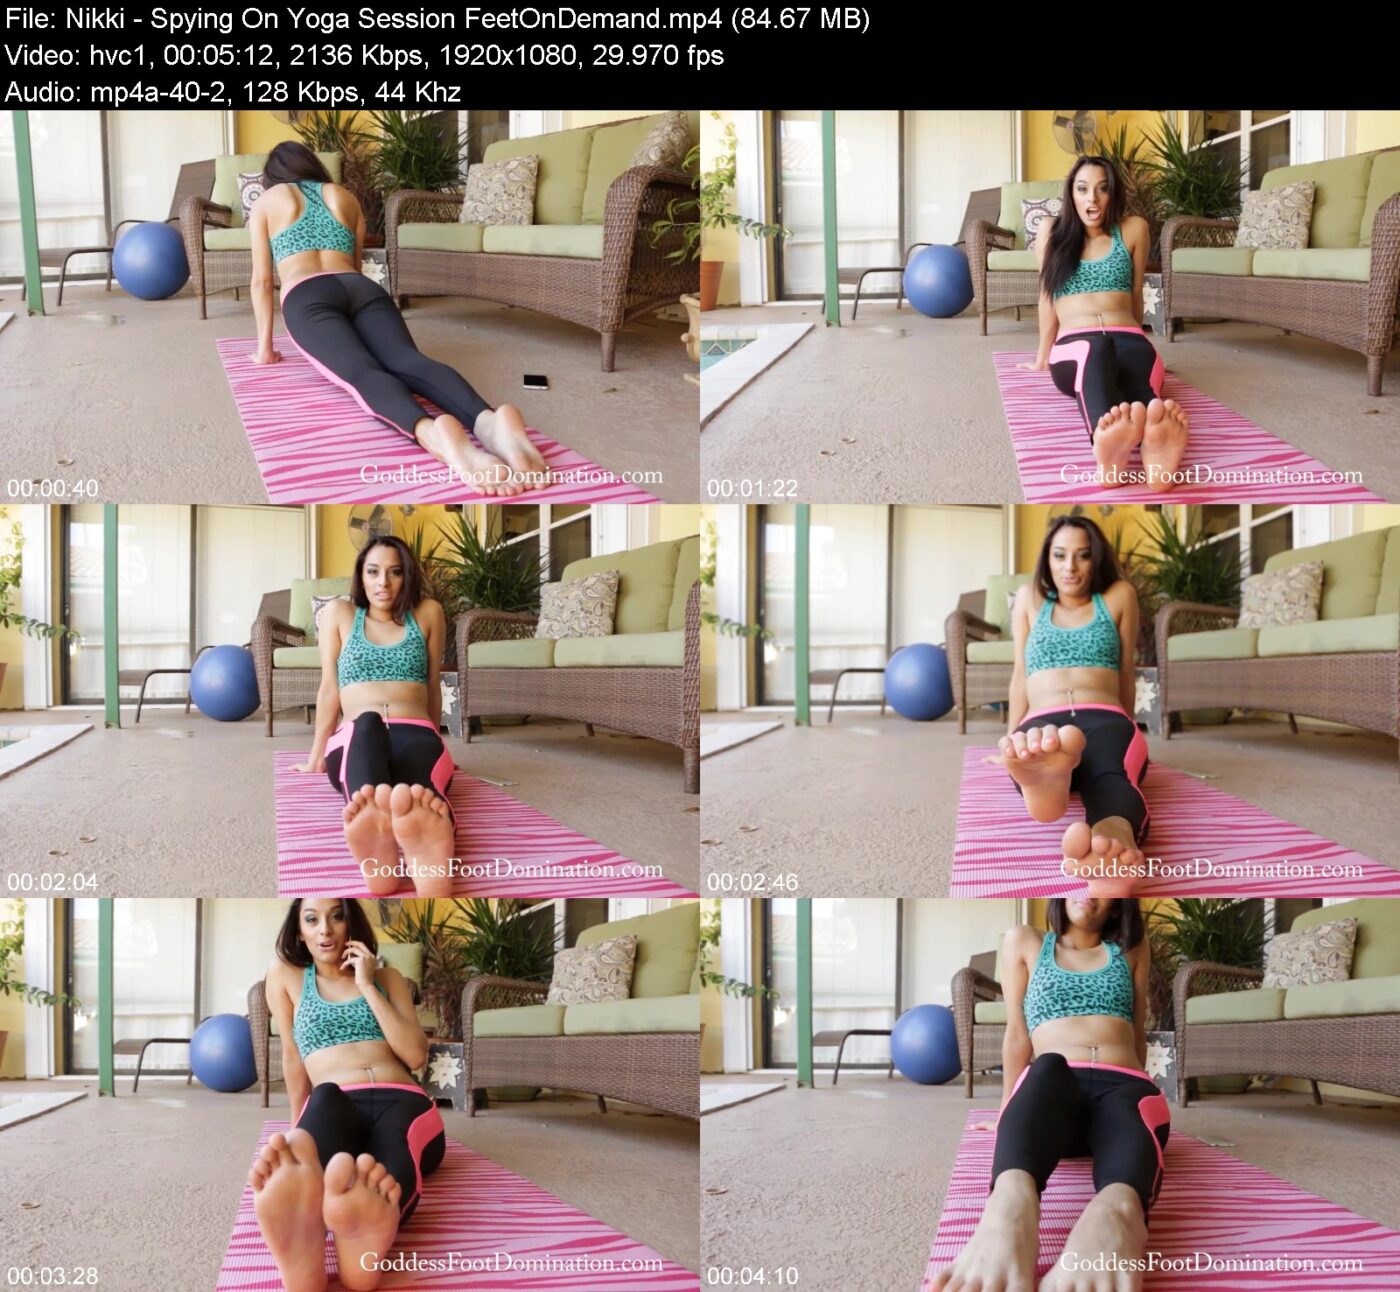 Nikki in Spying On Yoga Session FeetOnDemand